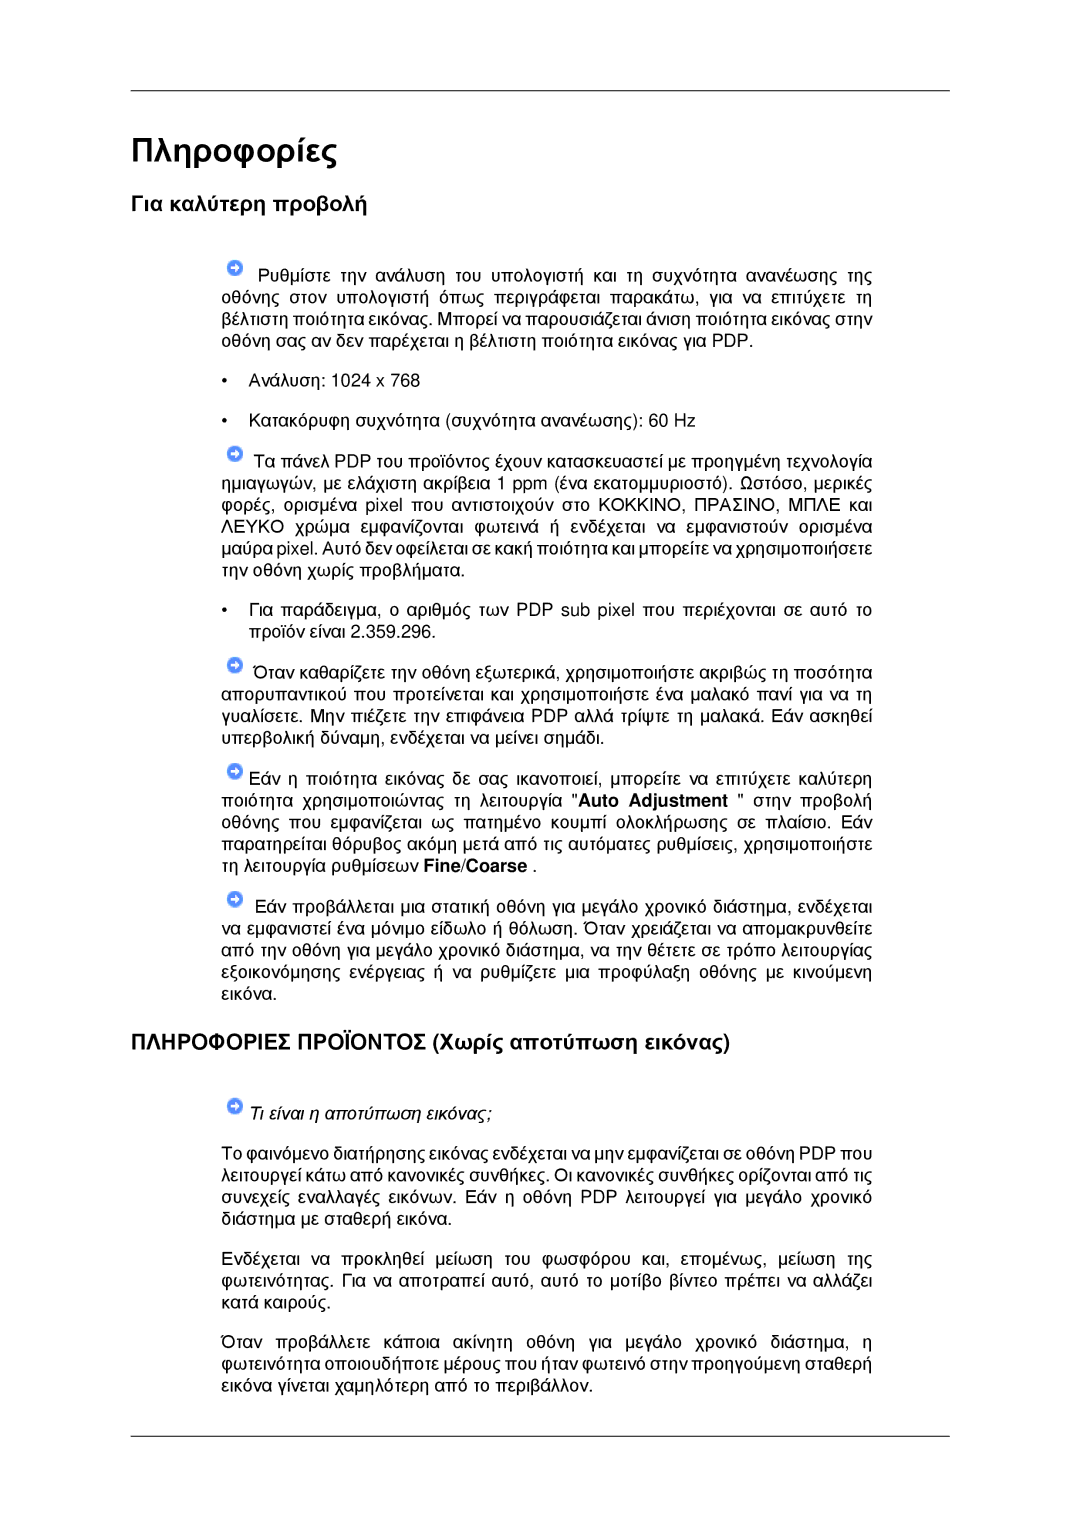 Samsung PH42KPPLBC/EN manual Για καλύτερη προβολή, Πληροφοριεσ Προϊοντοσ Χωρίς αποτύπωση εικόνας 